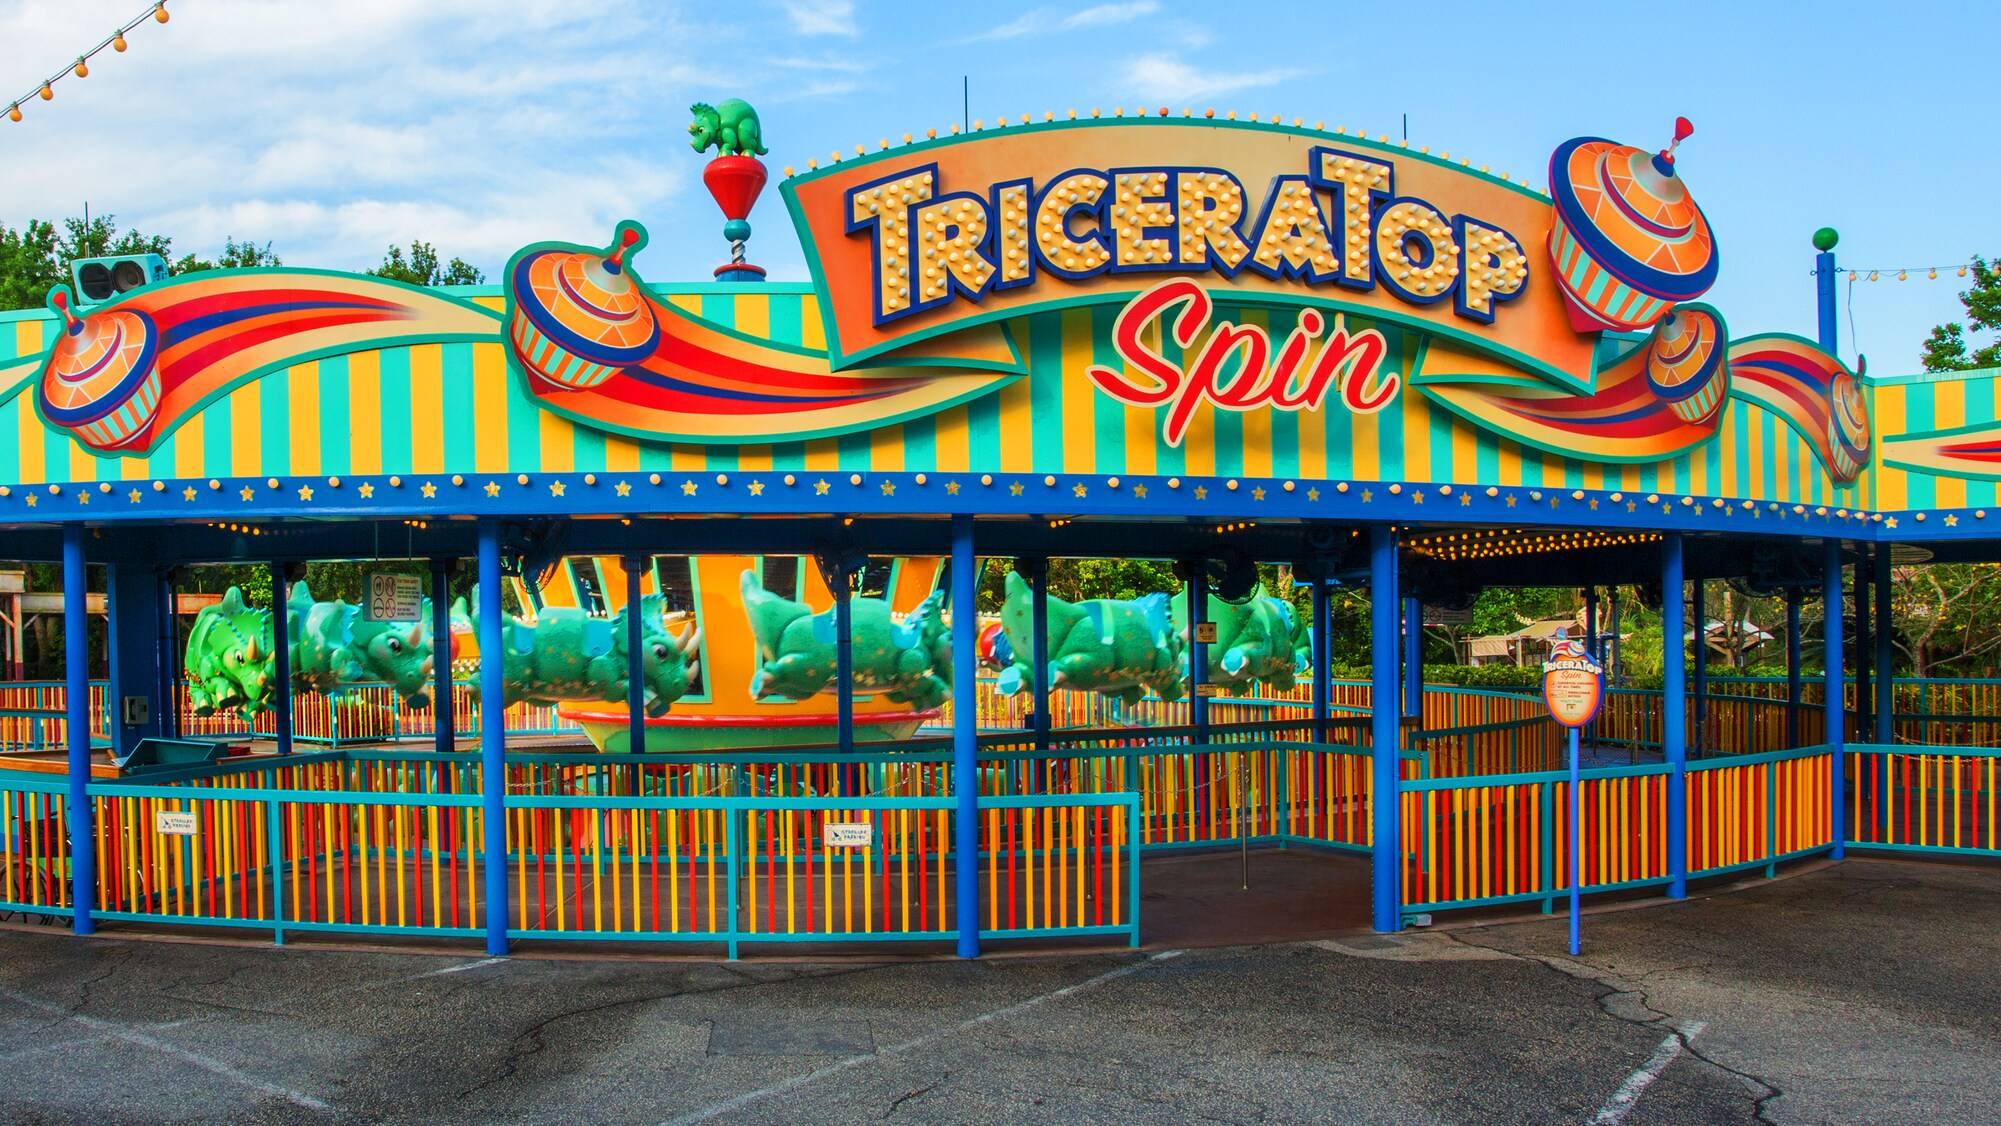 Tricera Top Spin closed for refurbishment